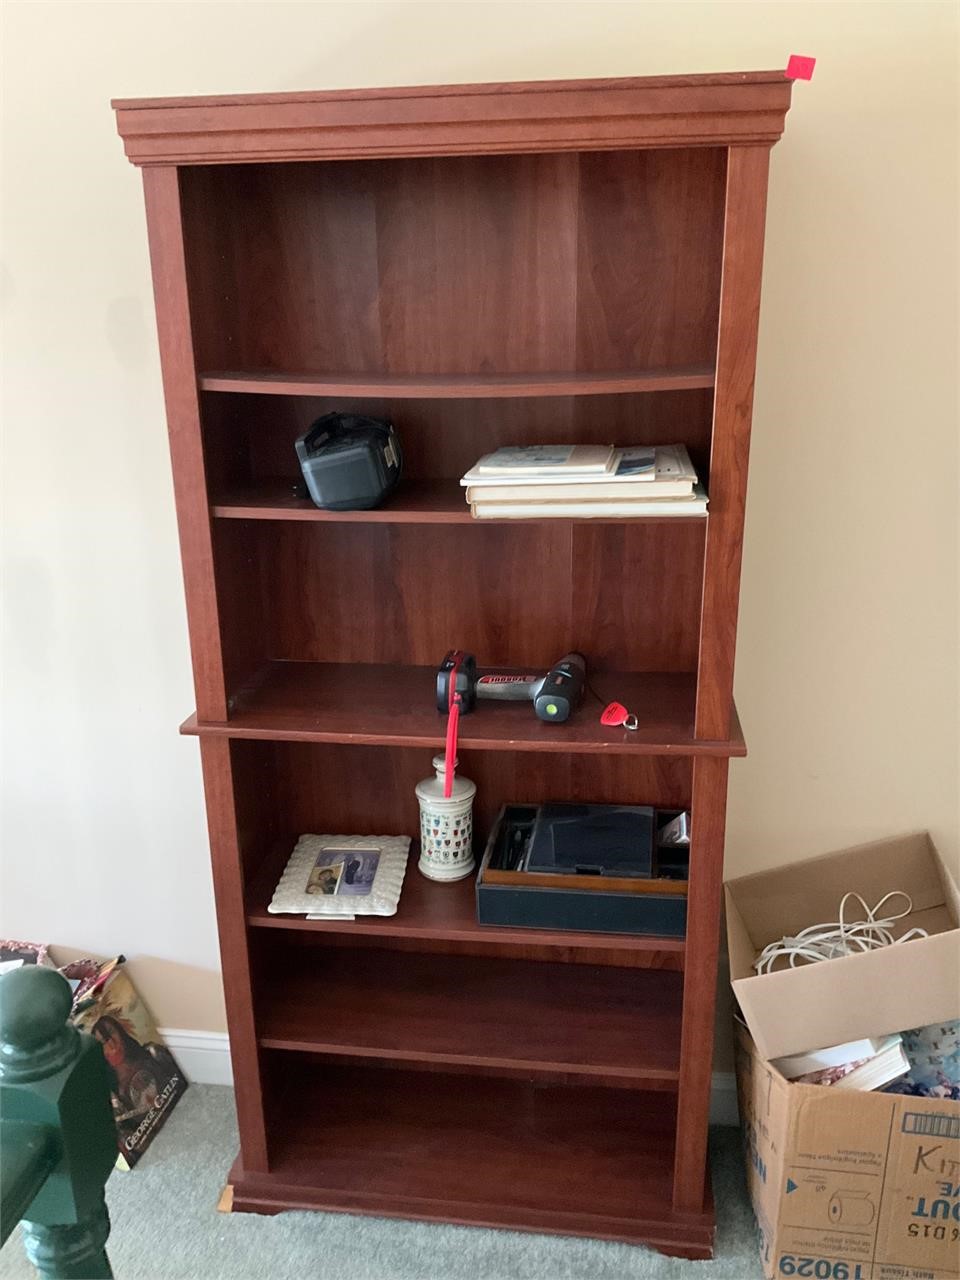 6-Shelf Wooden Bookshelf. Contents Not Included